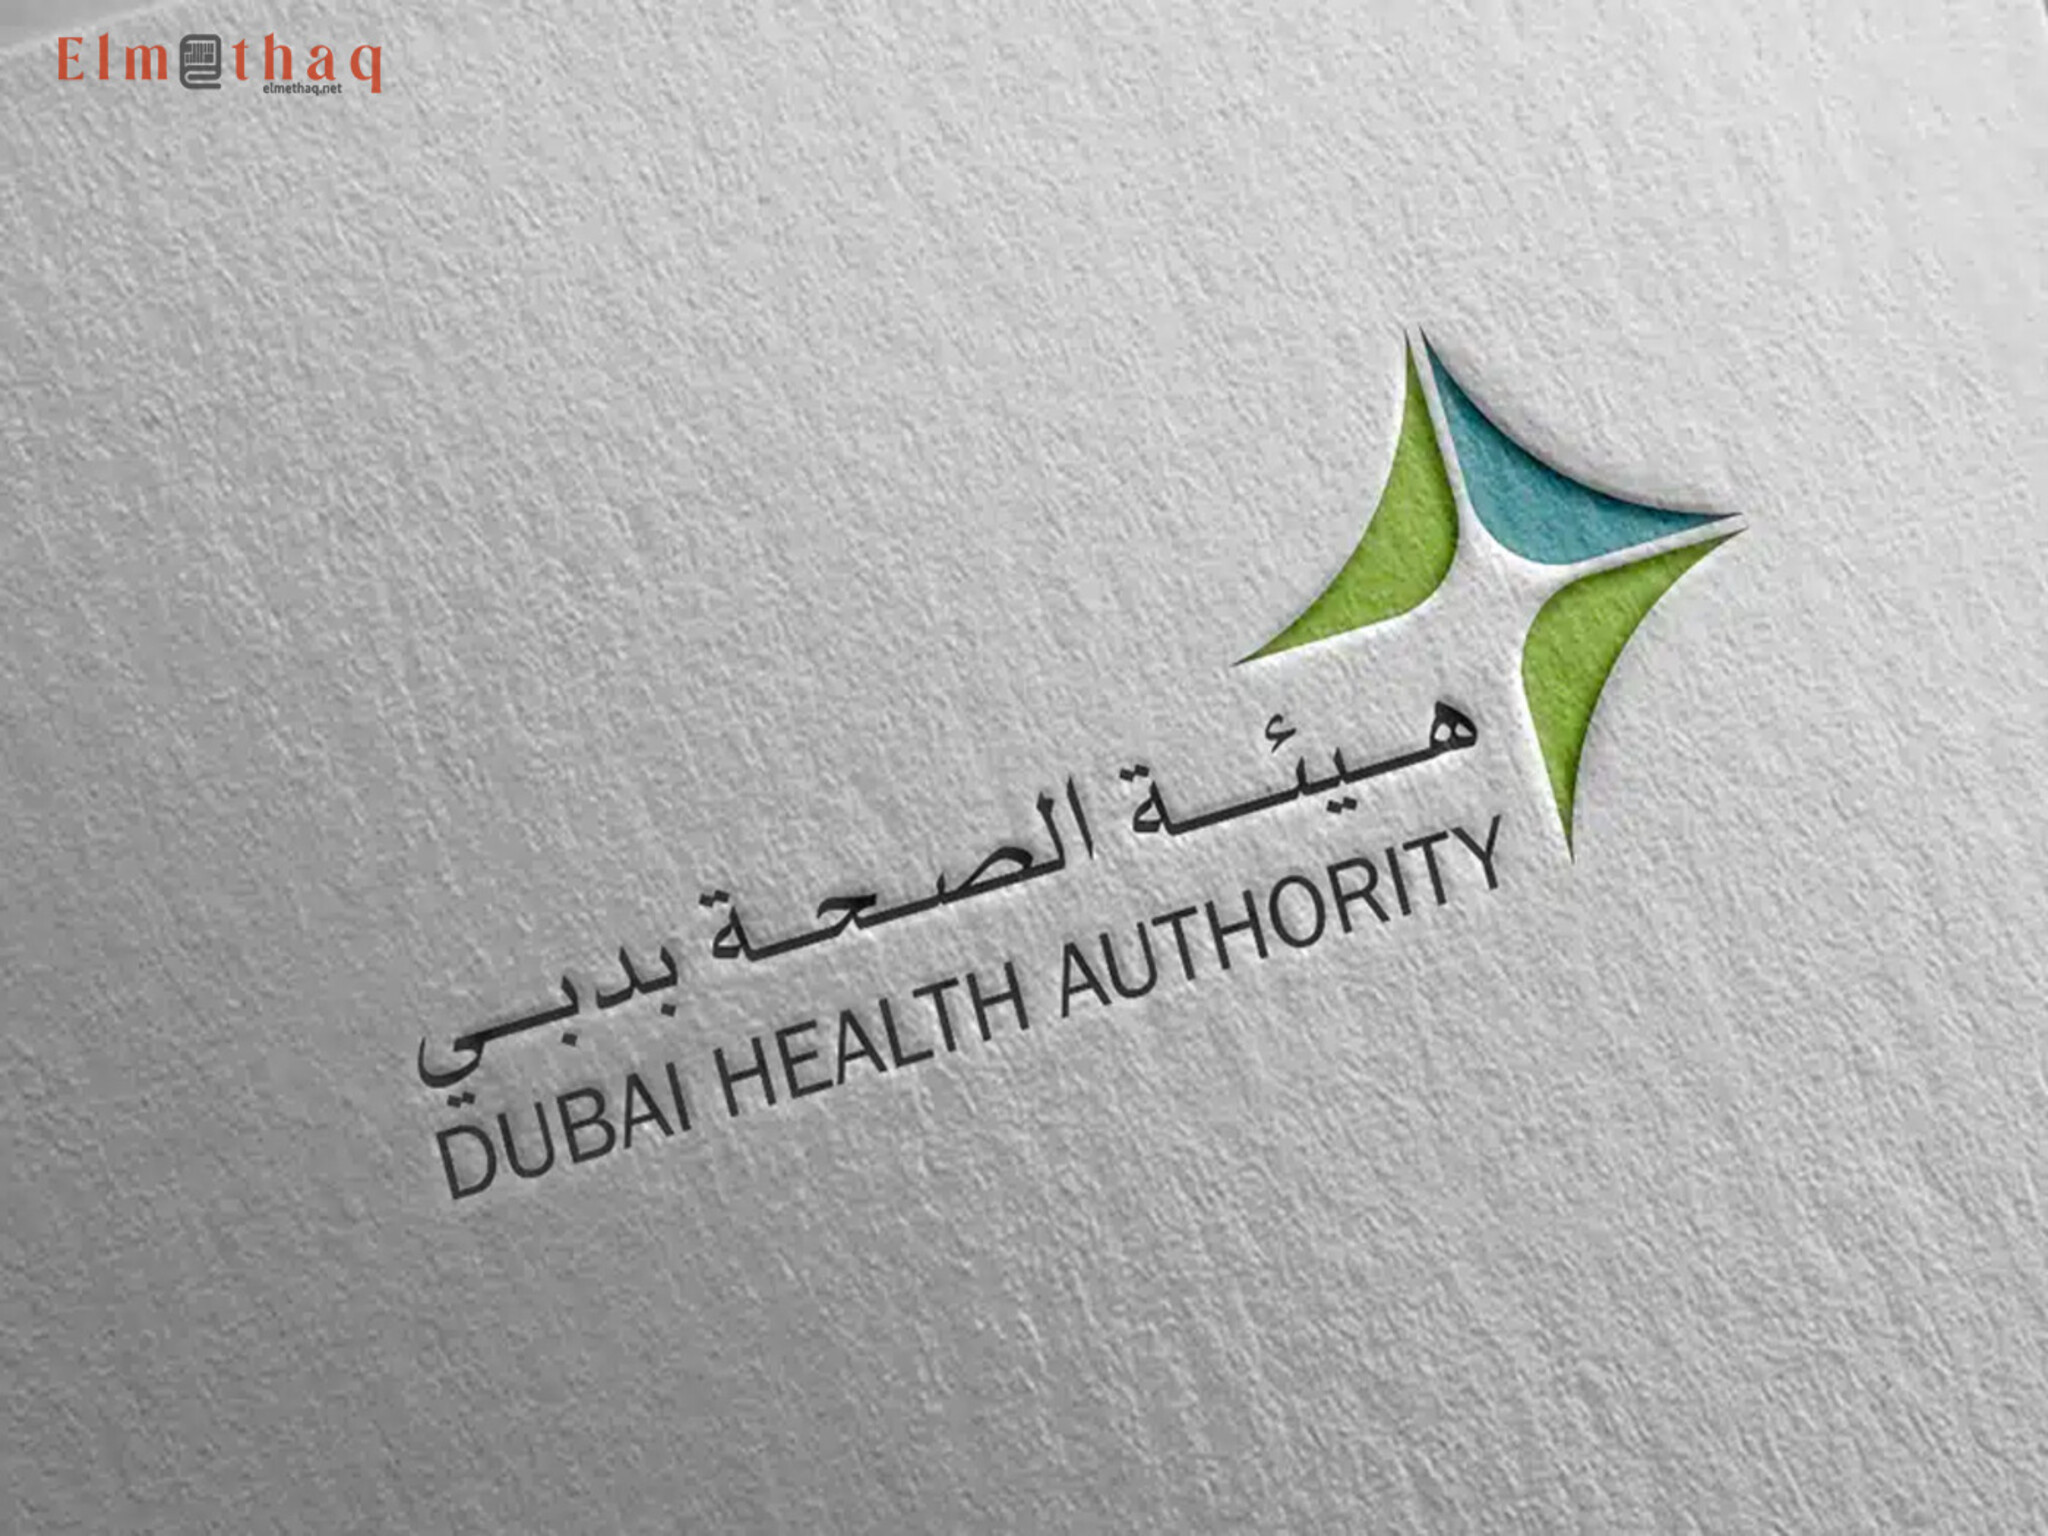 UAE Declares Registration for Dubai Health Specialties Program